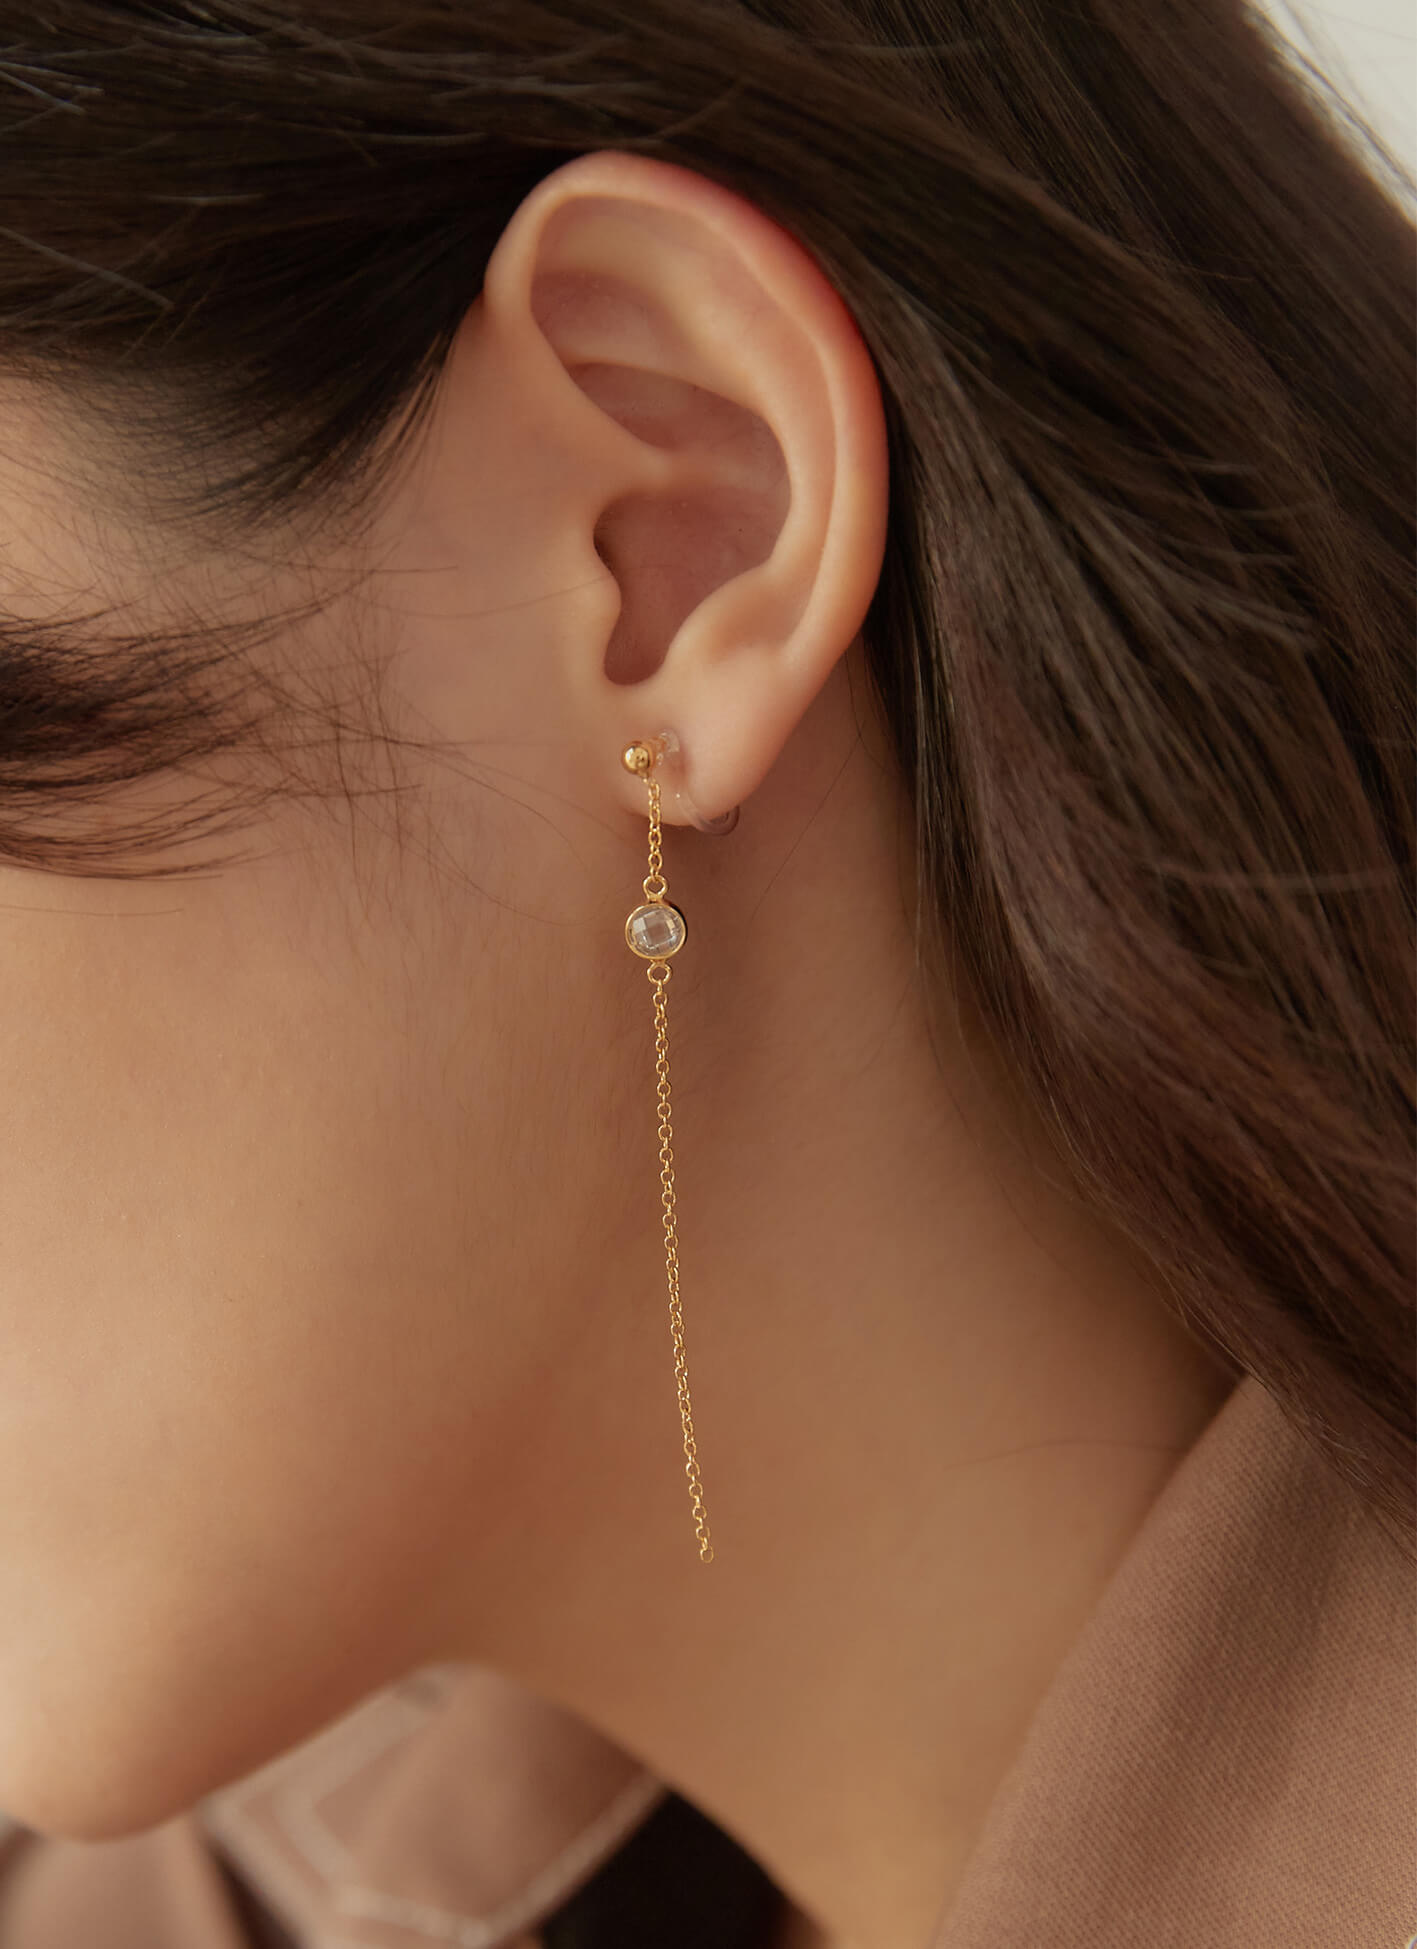 Eco安珂,韓國飾品,韓國耳環,耳針式耳環,矽膠夾耳環,透明耳夾耳環,矽膠夾垂墜耳環